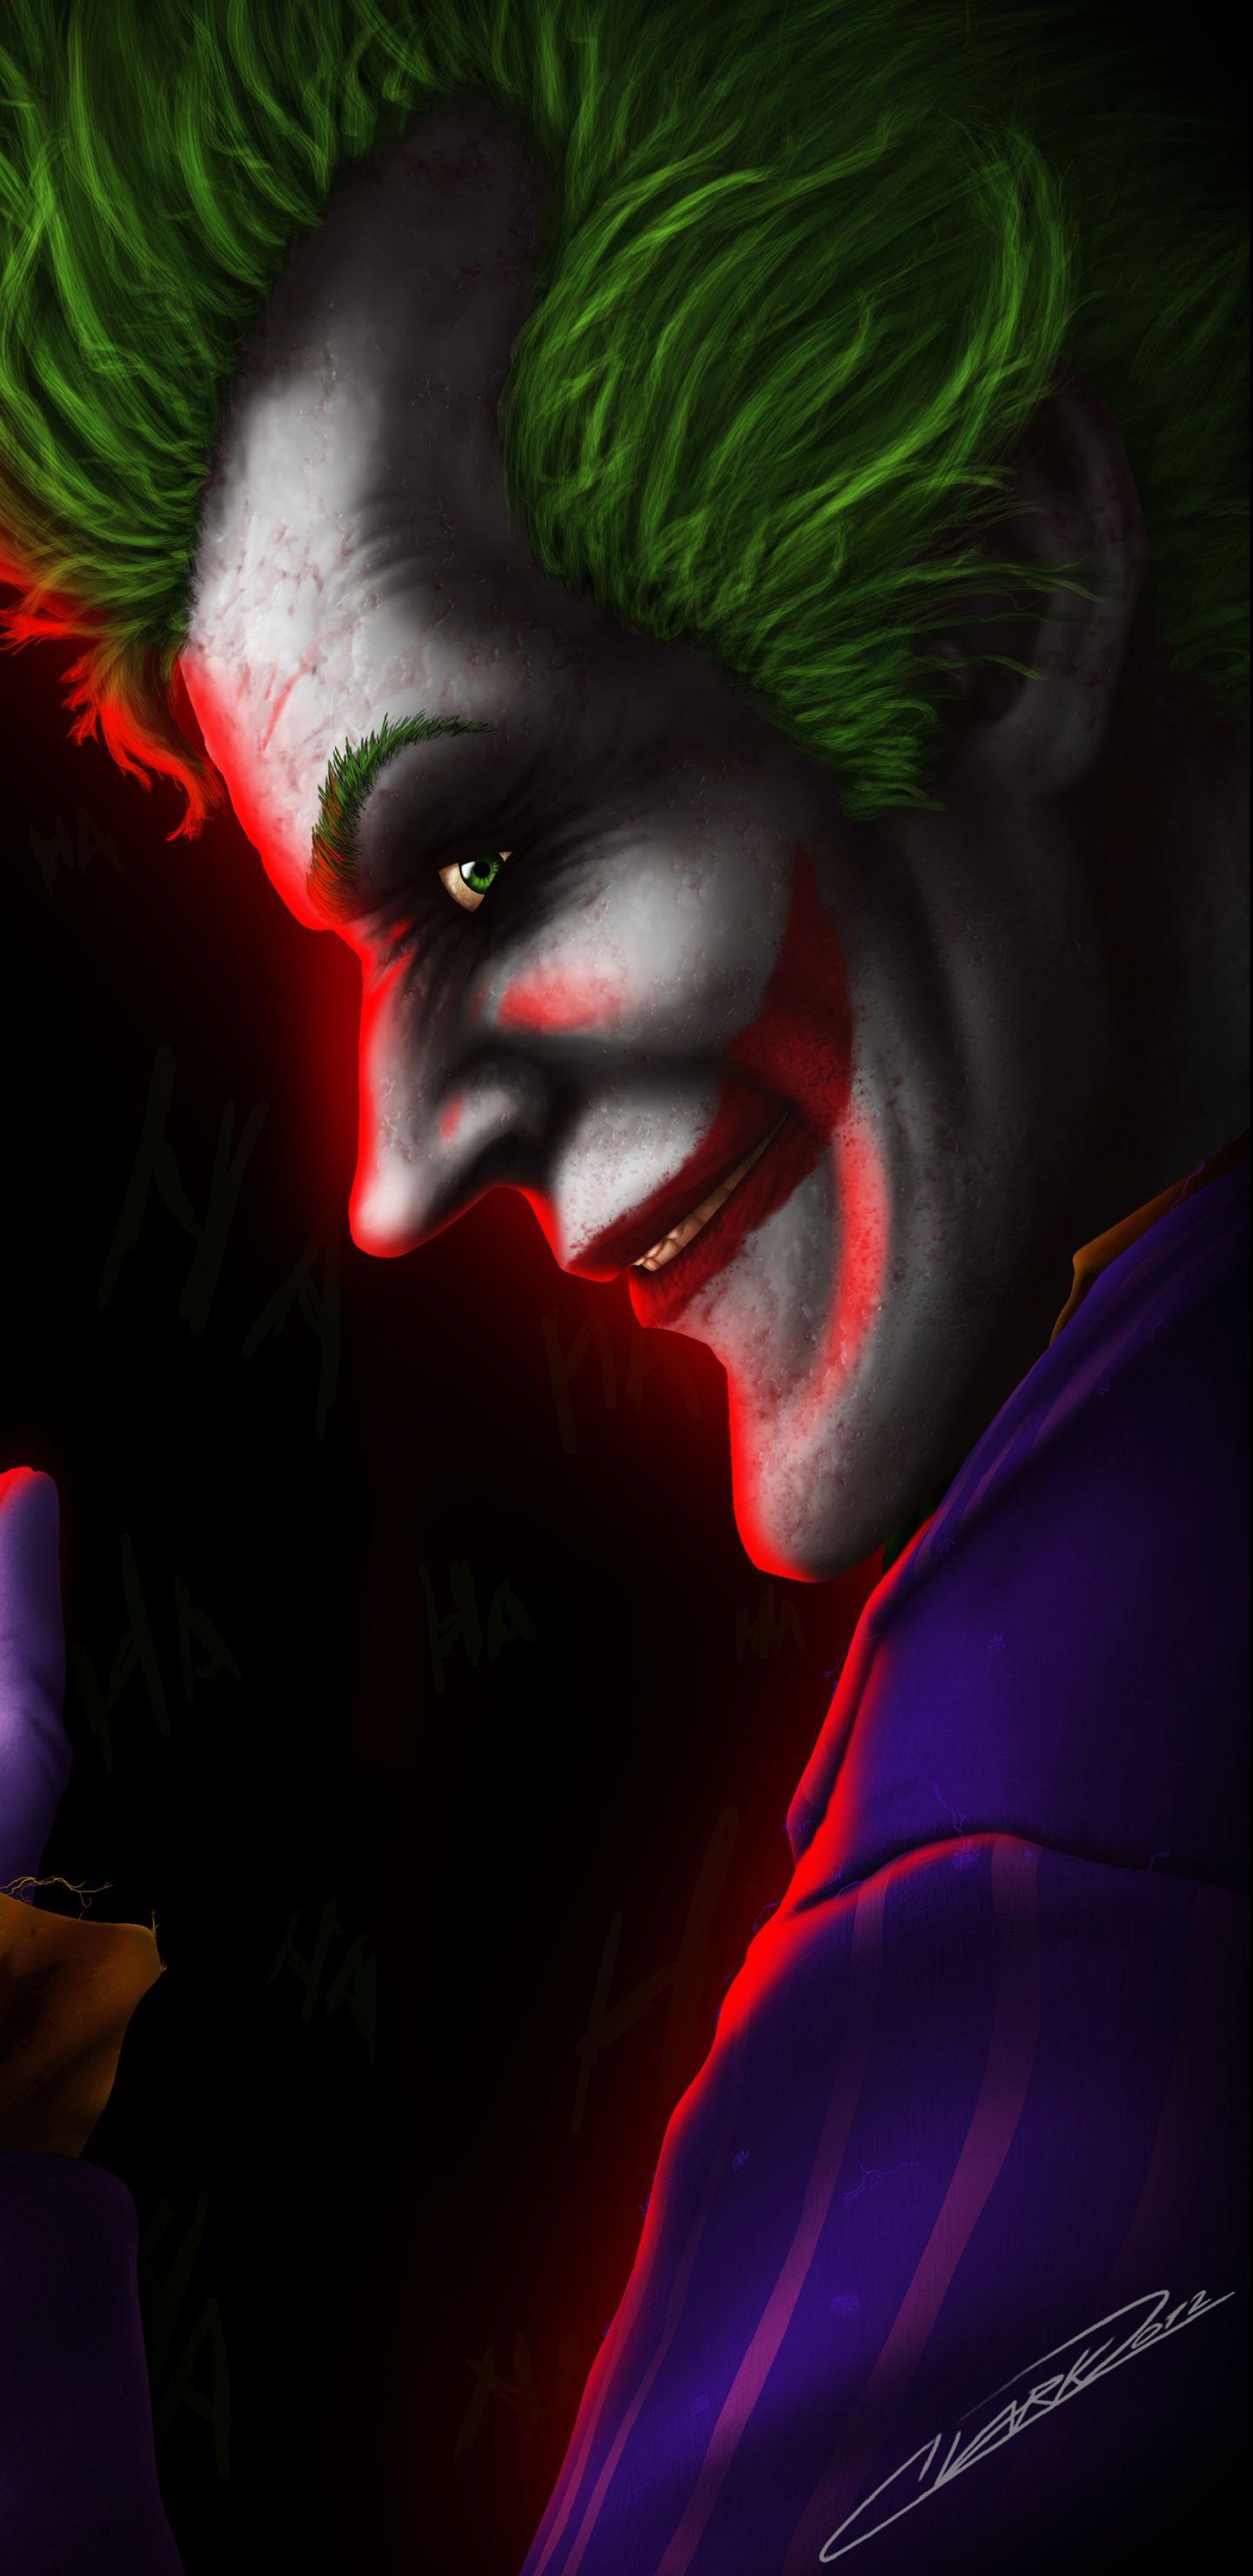 Joker Images Hd Mobile Wallpaper 4k Download